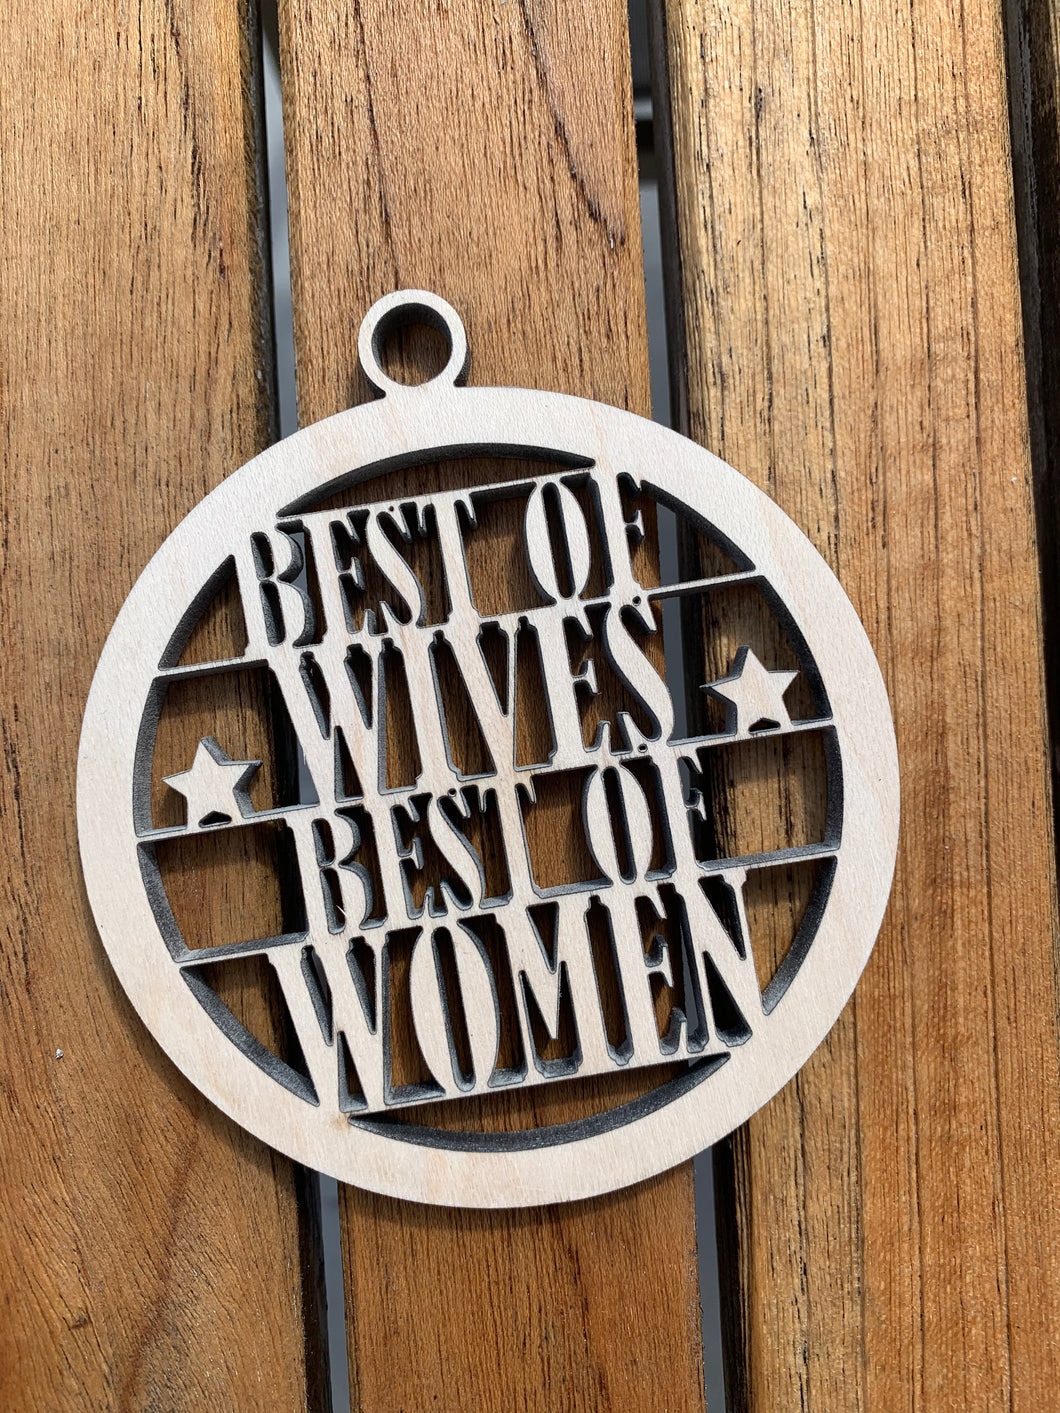 Hamilton Ornament Best of Wives Best of Women